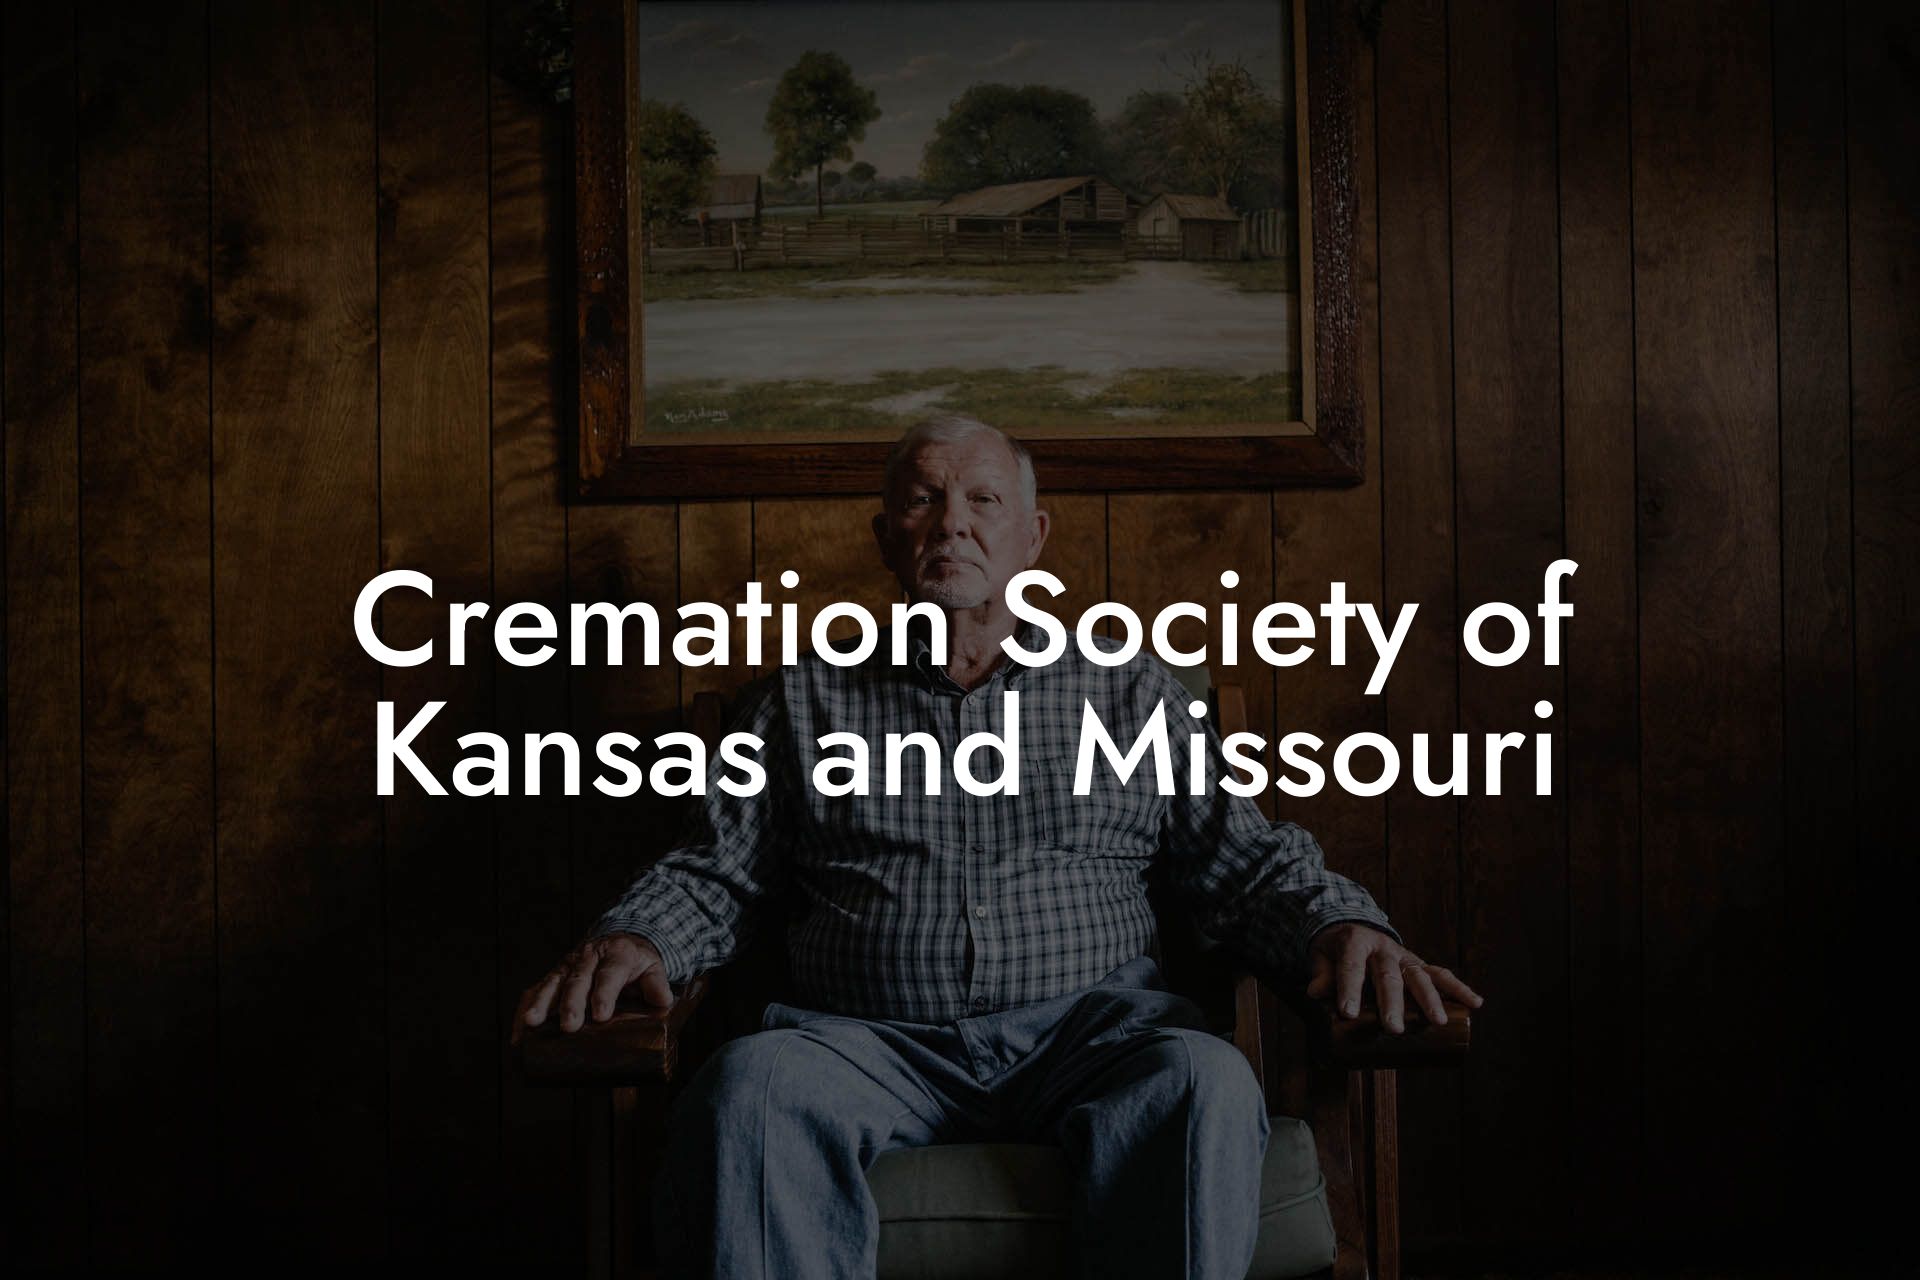 Cremation Society of Kansas and Missouri